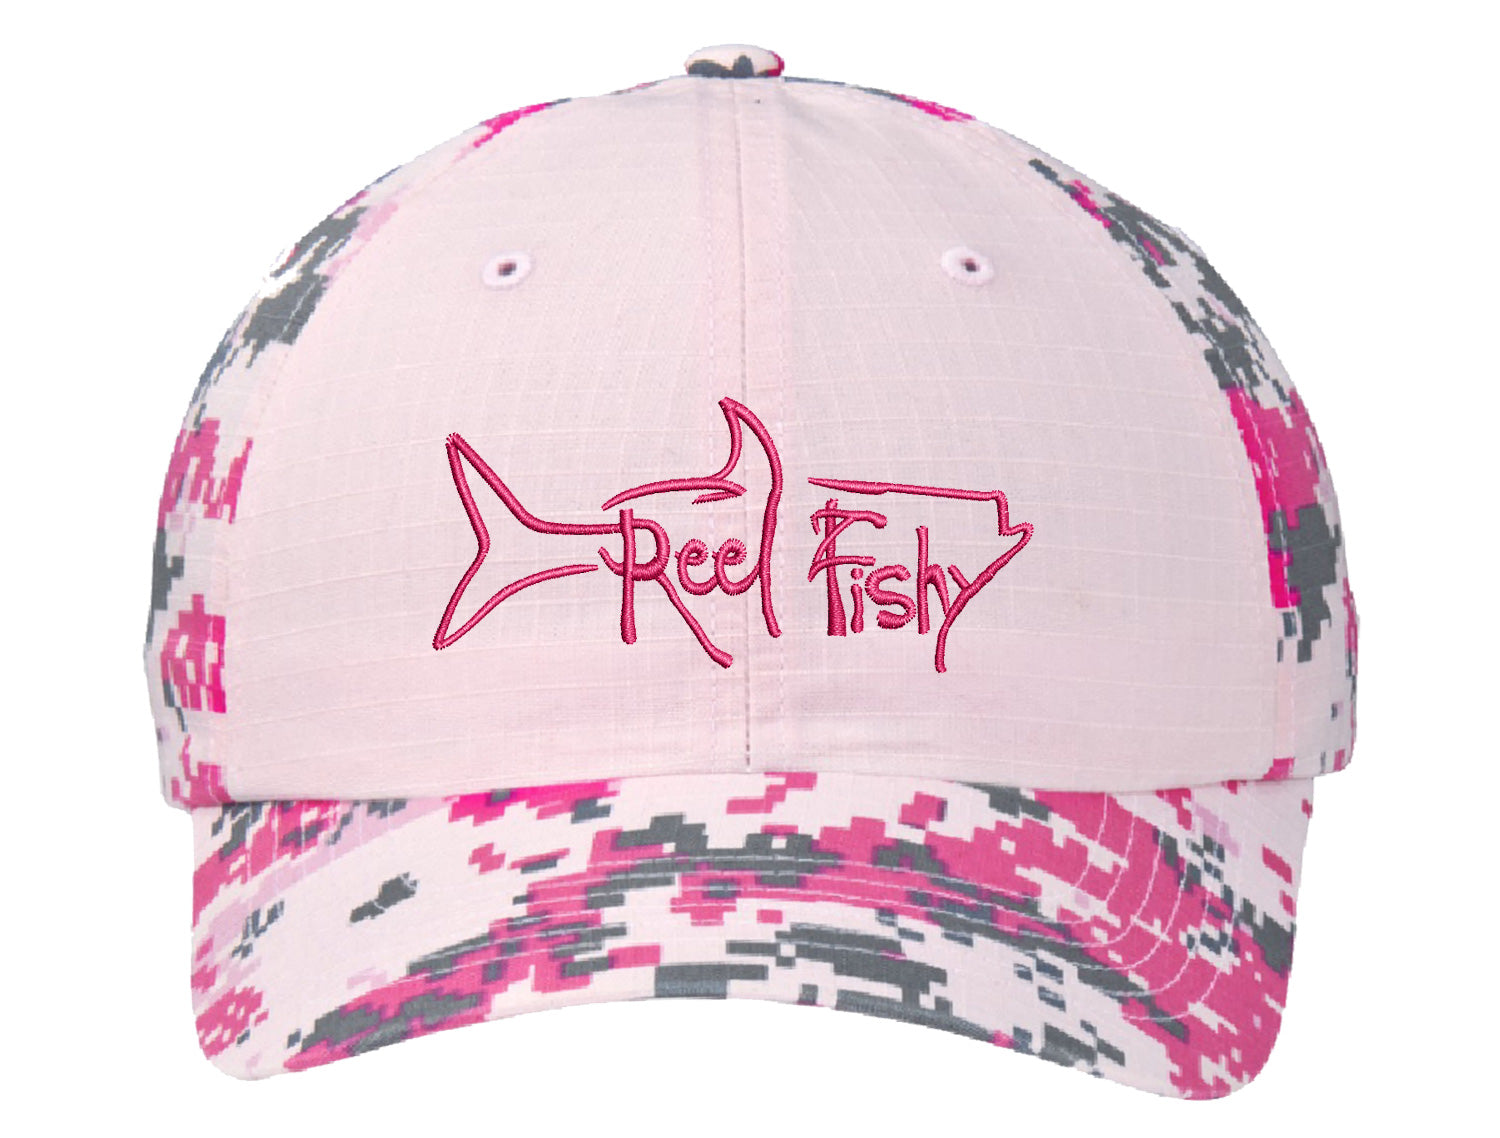 Pink Digital Camo Unstructured Dad Hat with Pink Reel Fishy Tarpon Logo